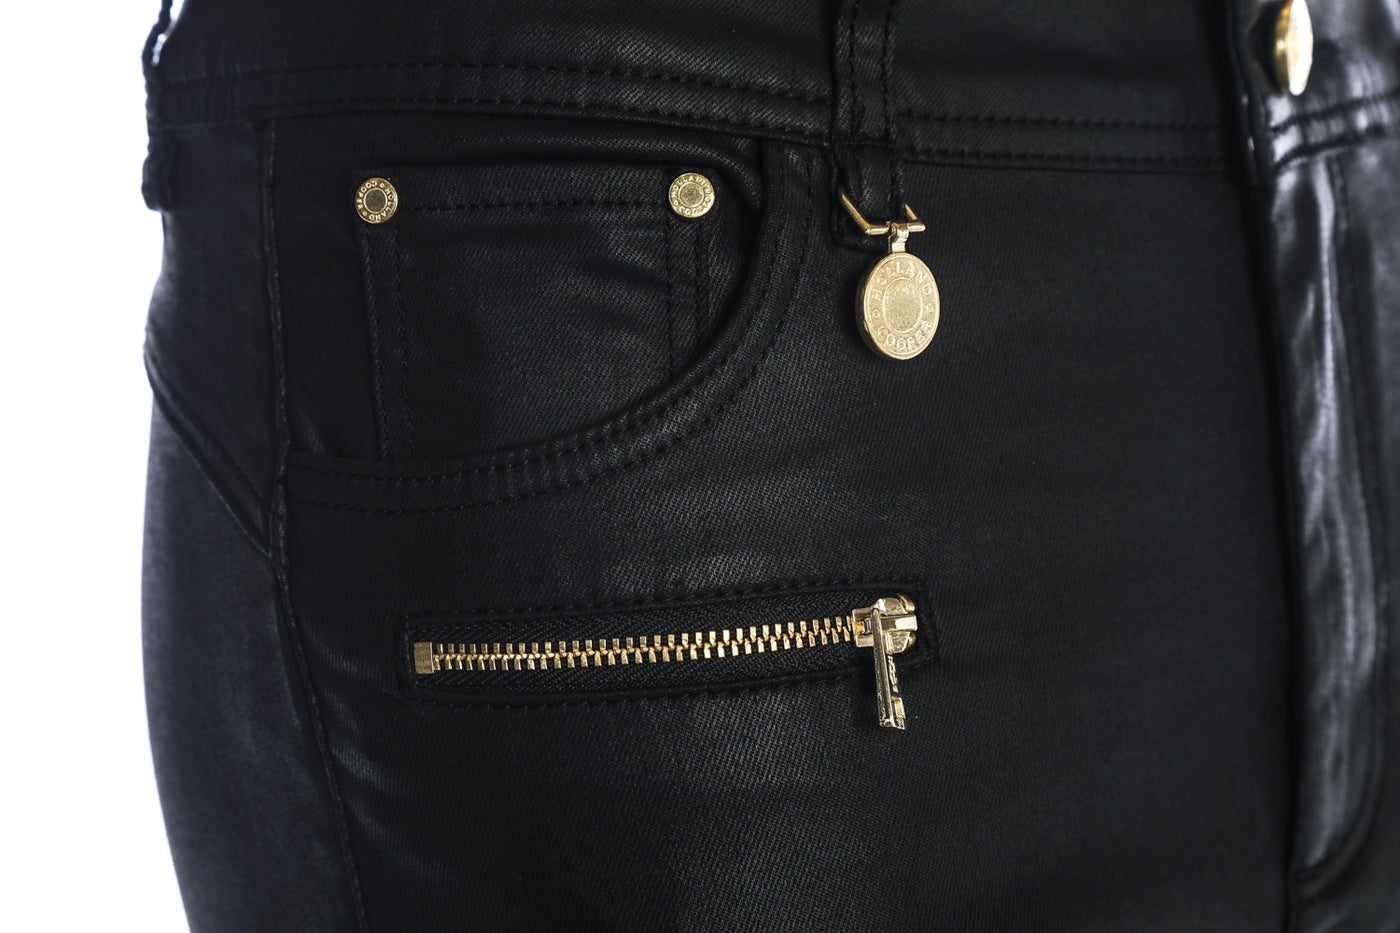 Holland Cooper Coated Jodhpur Ladies Jean in Black Pocket